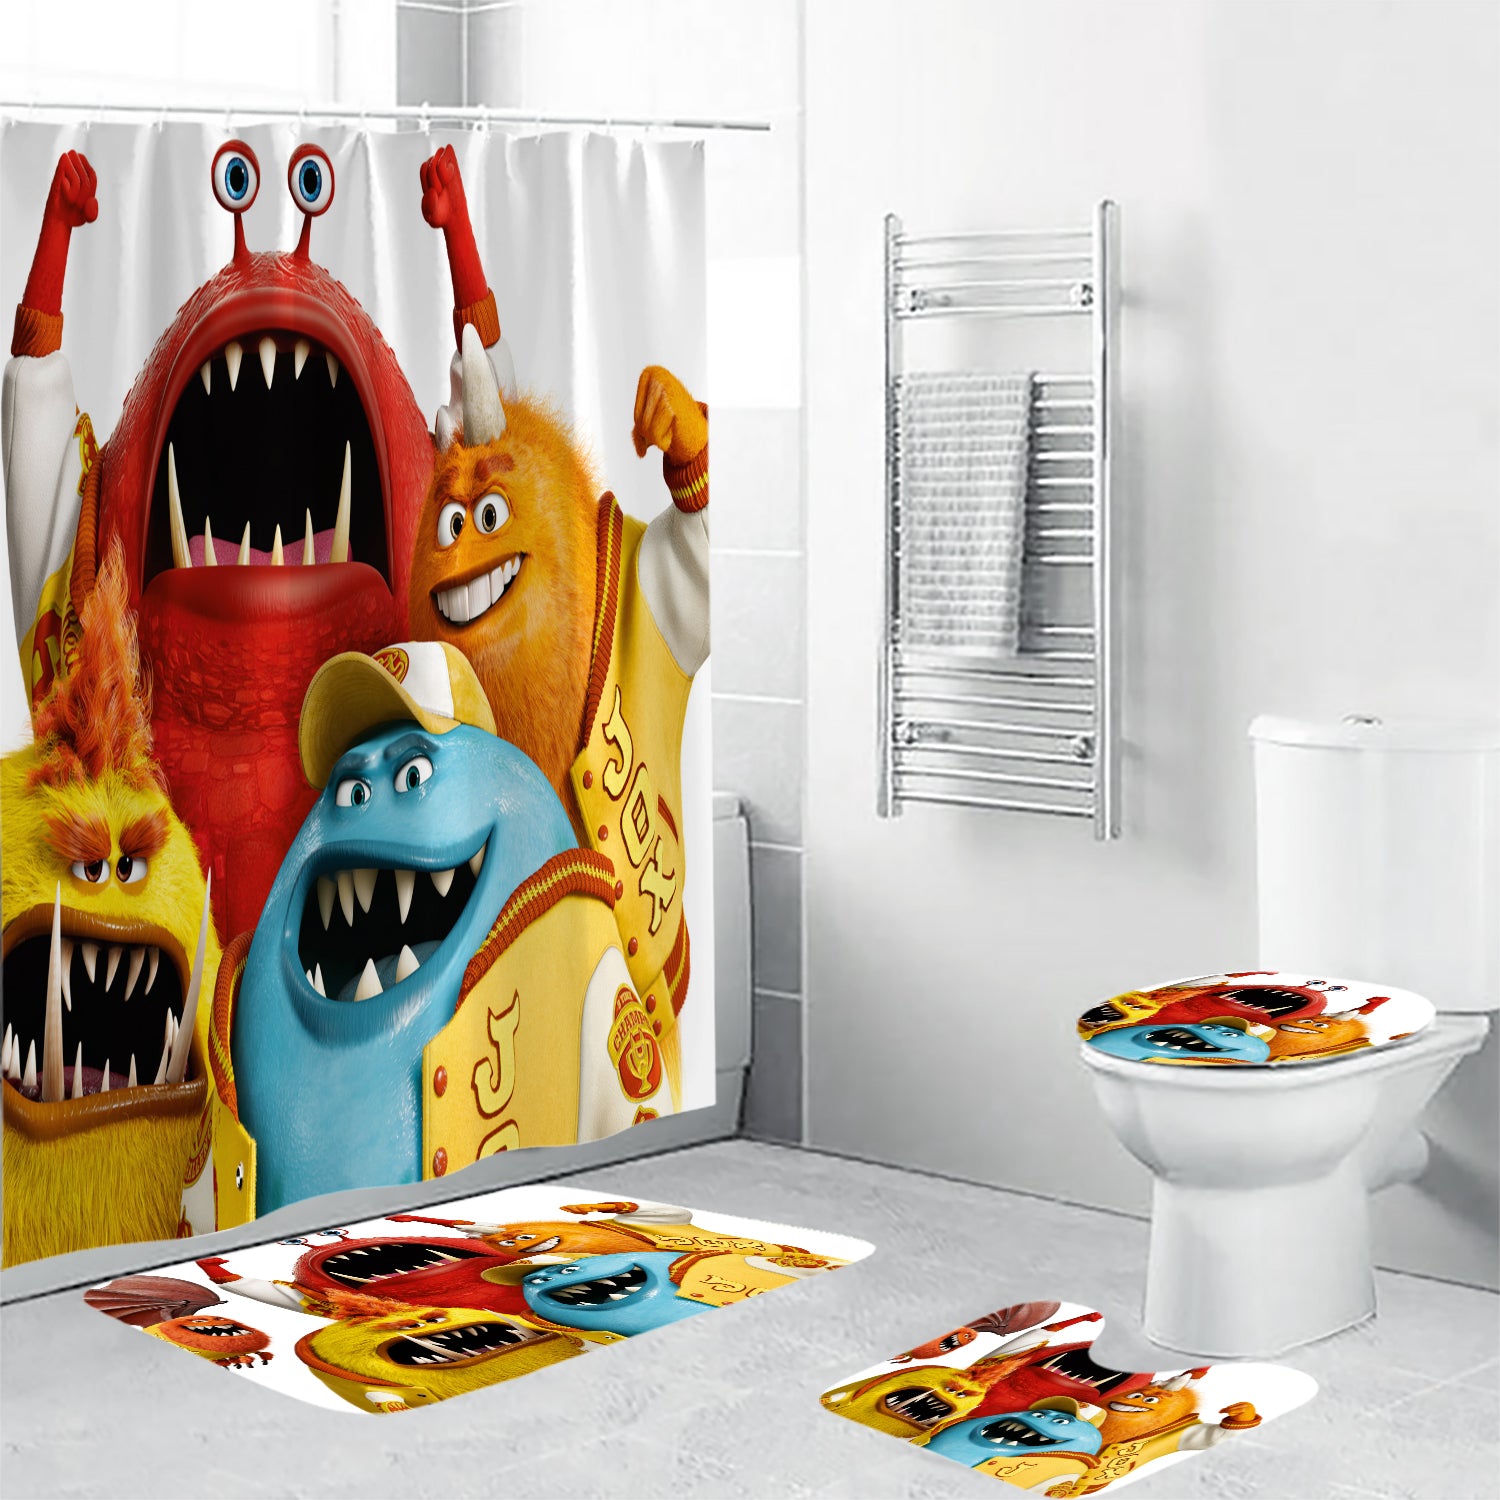 Characters v20 Monsters Inc Monsters University Movie Disney Pixar Waterproof Shower Curtain Non-Slip Toilet Lid Cover Bath Mat - Bathroom Set